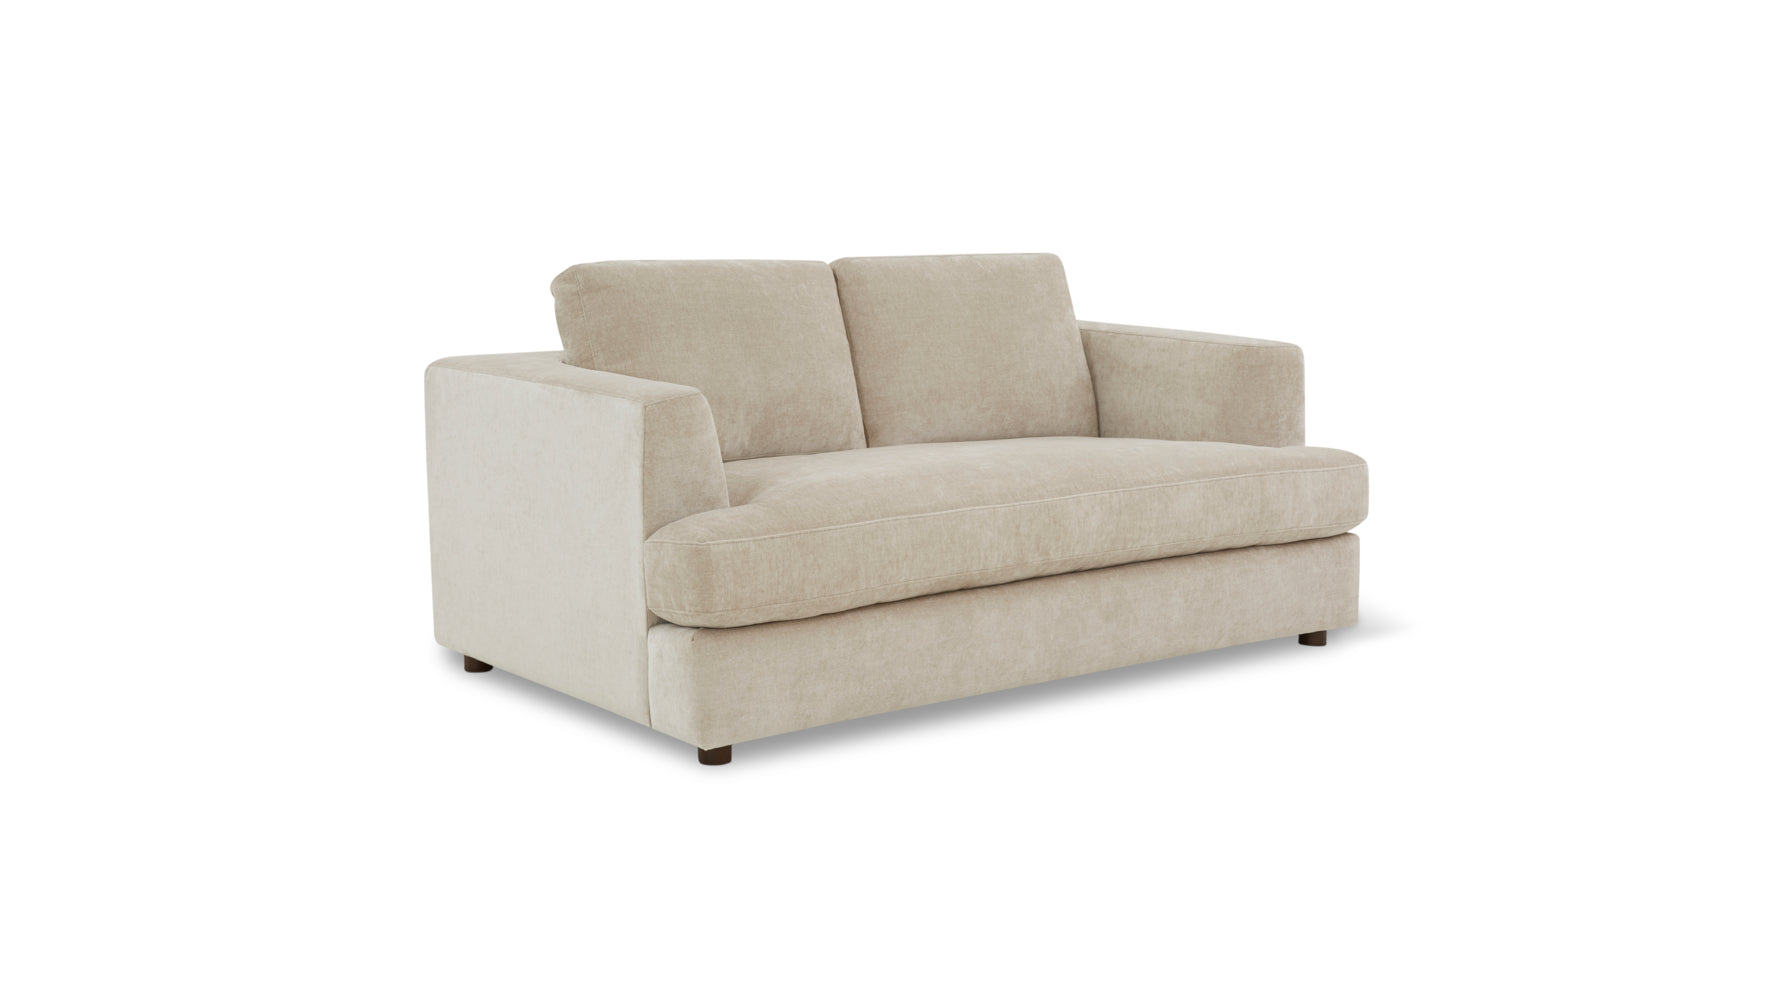 Good Company Sofa, 2 Seater, Cashew - Image 2